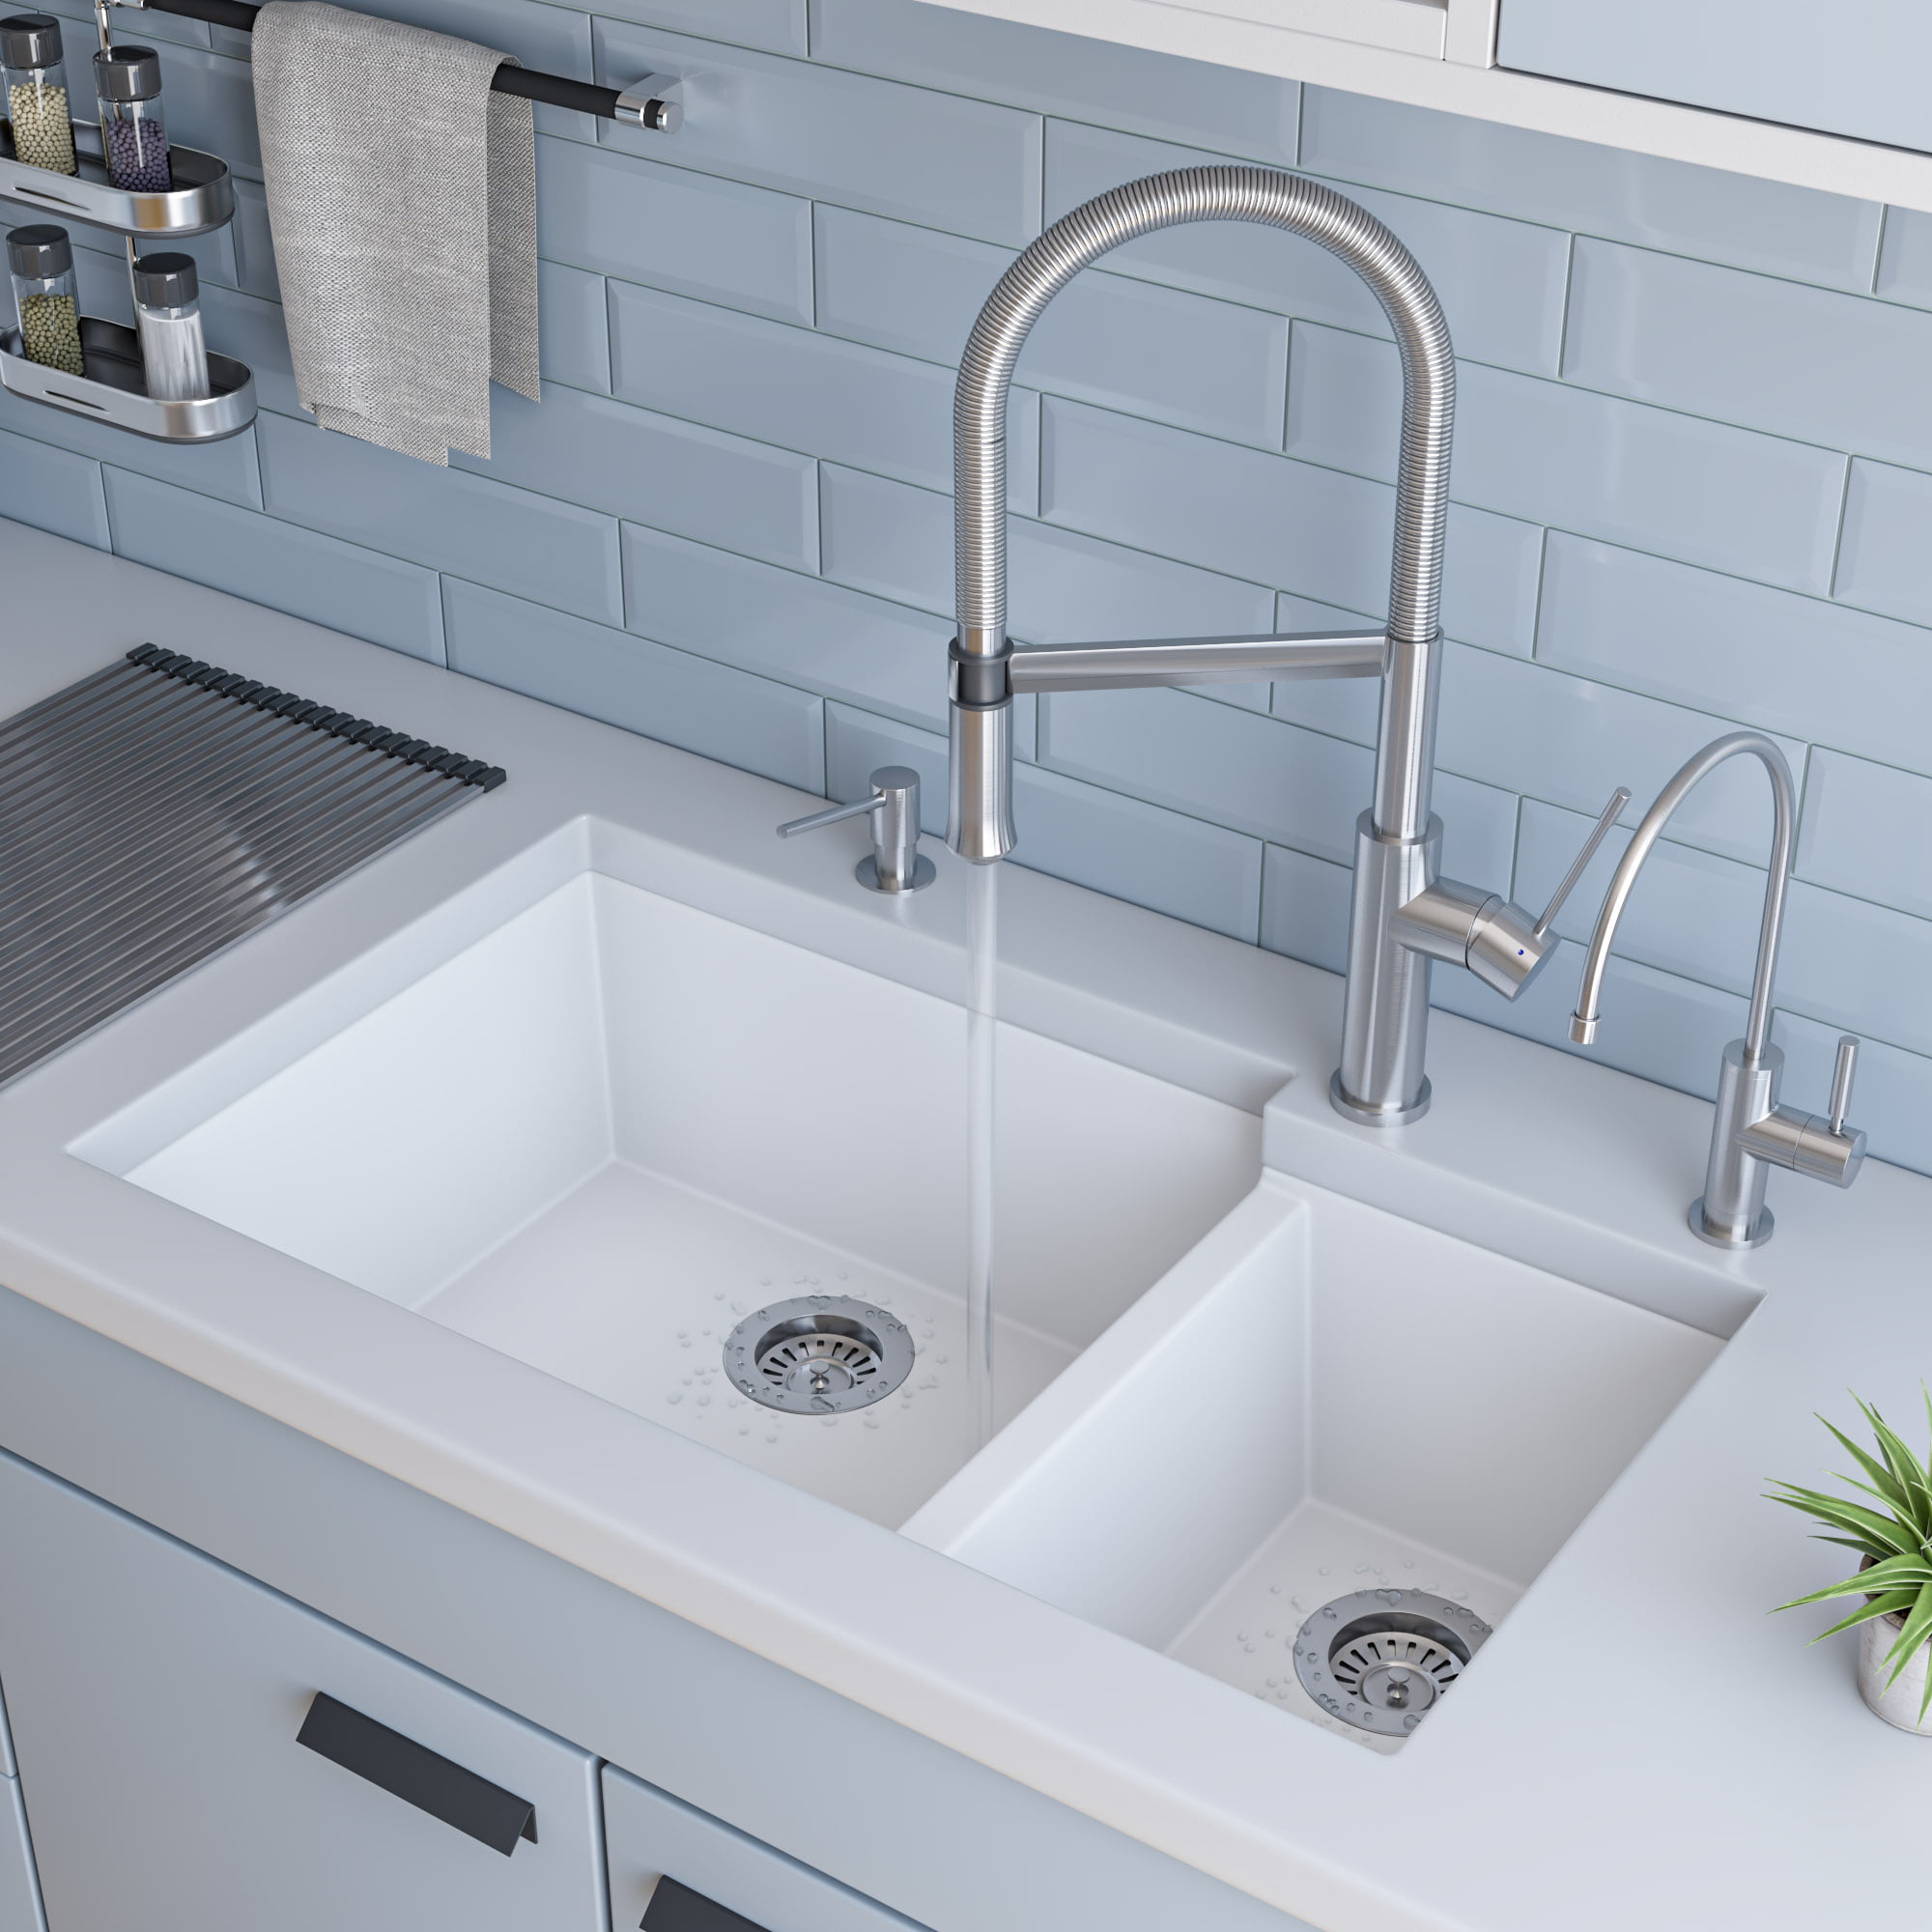 Picture of ALFI Brand AB3319UM-W 34 in. Double Bowl Undermount Granite Composite Kitchen Sink - White